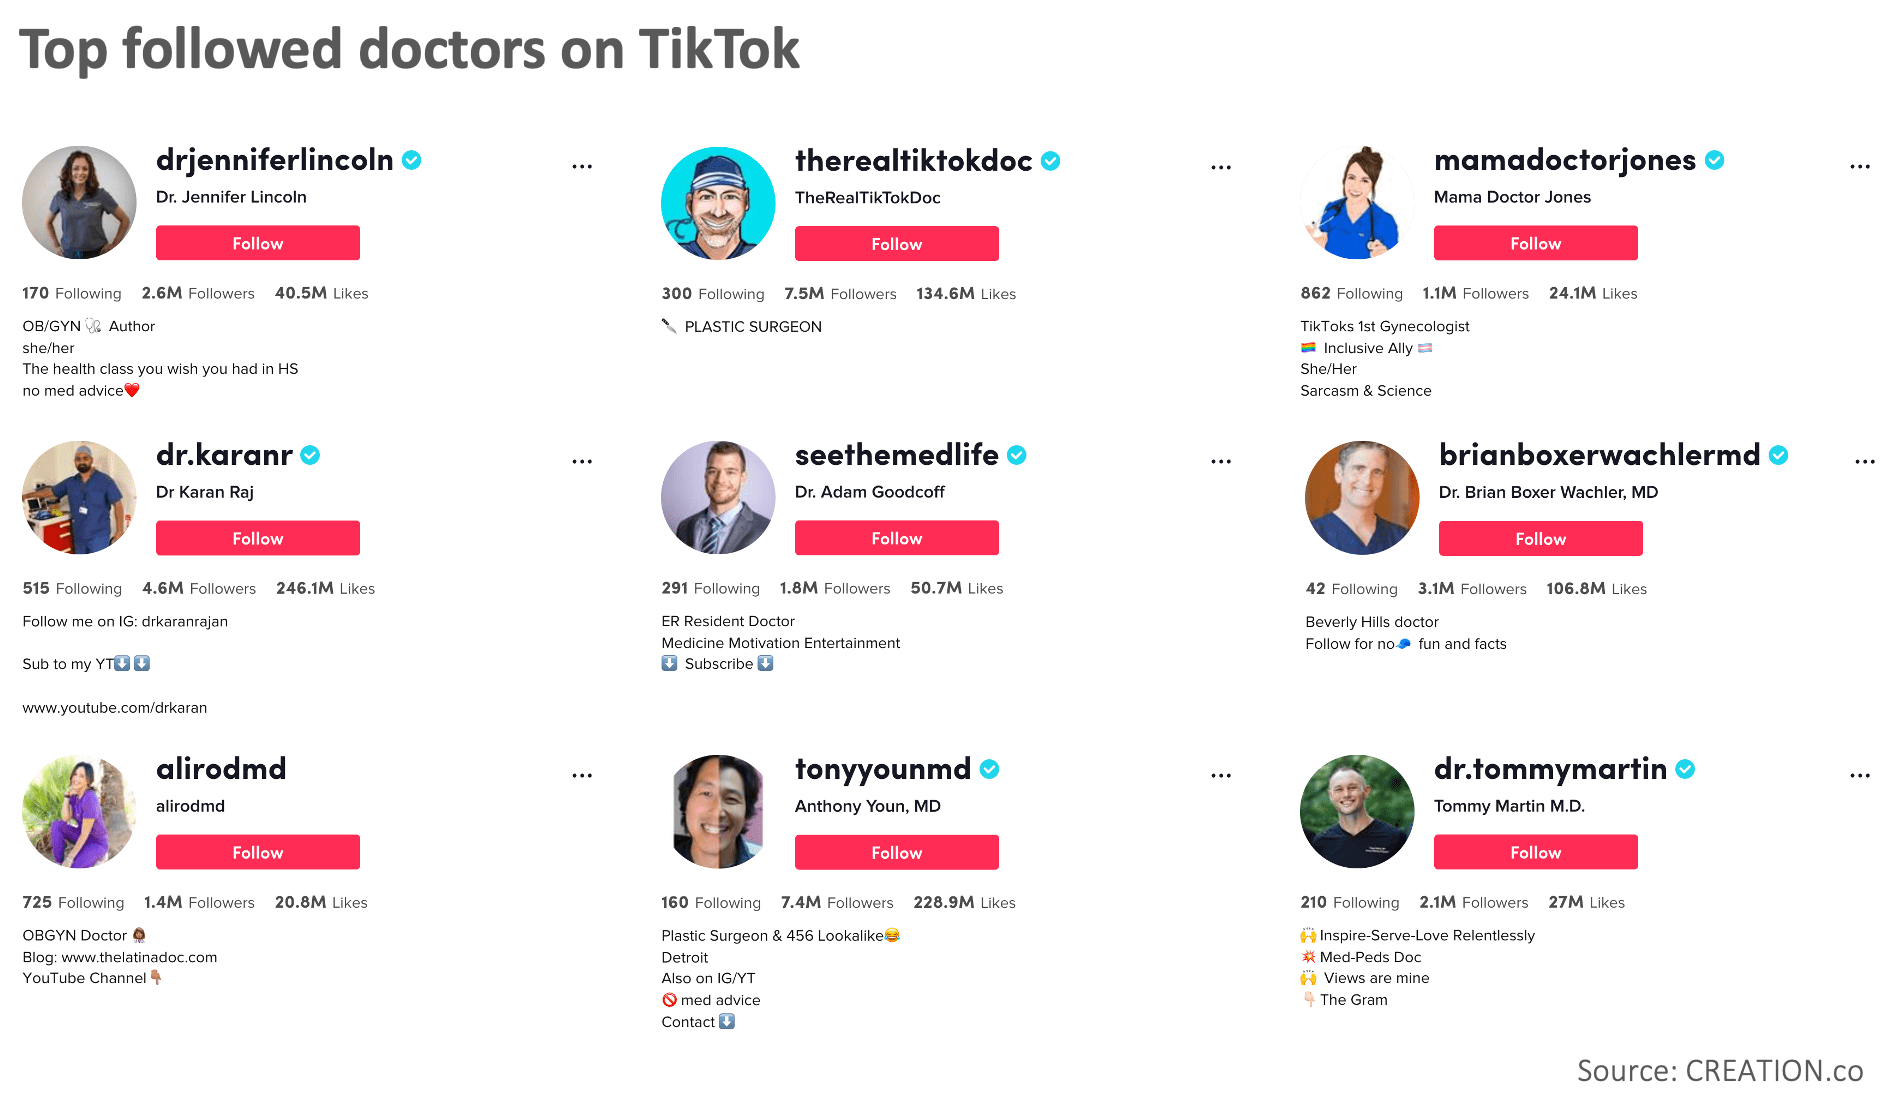 Image showing top followed doctors on TikTok